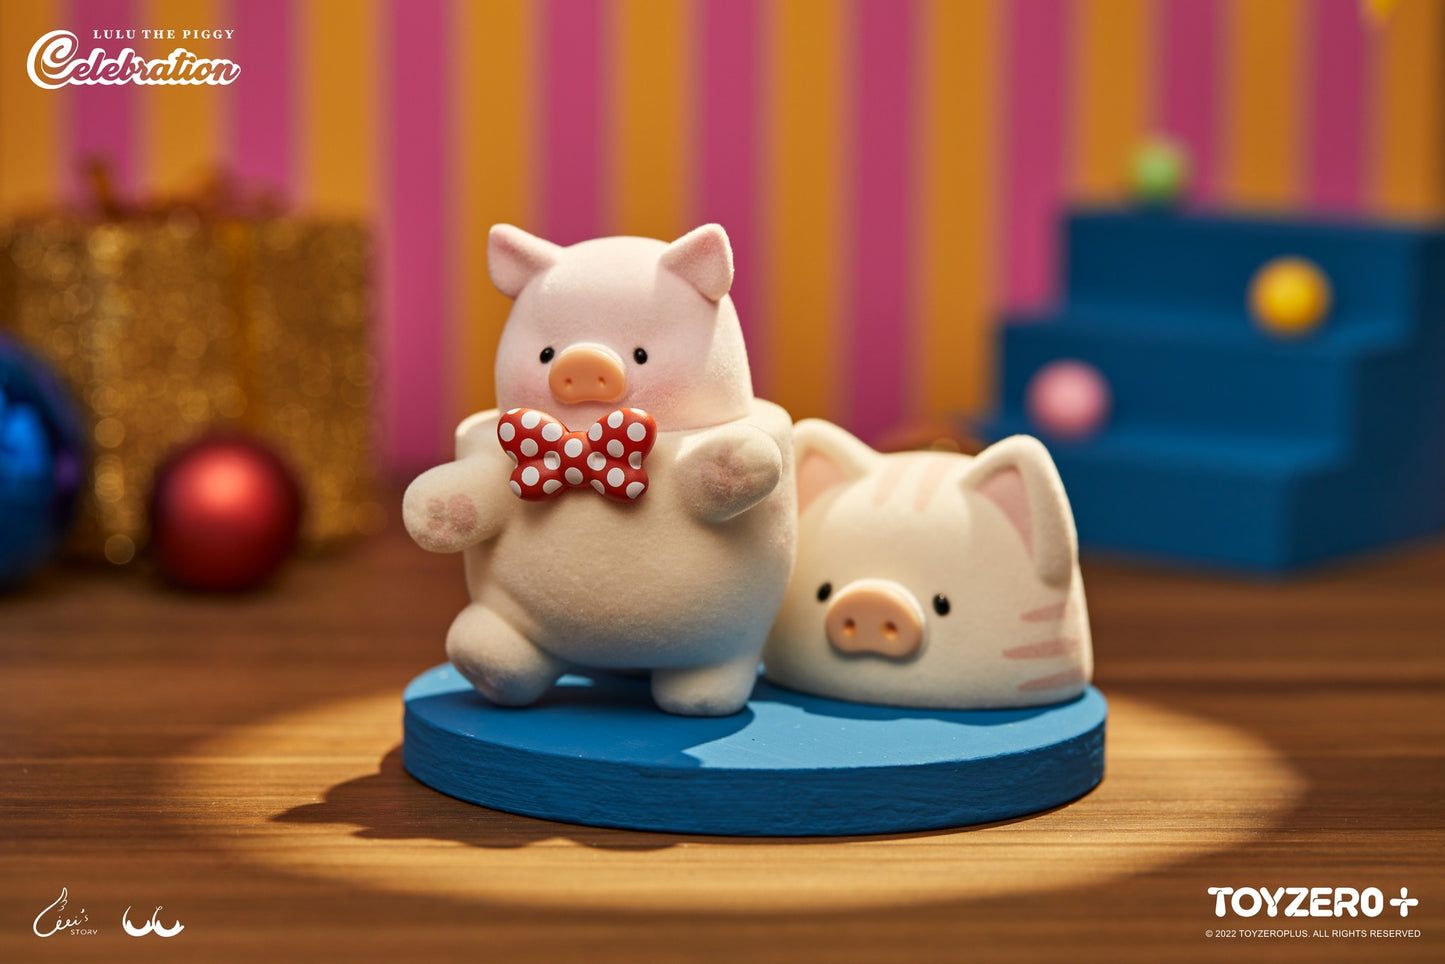 LuLu the Piggy Celebration Series Blind Box 罐頭豬LuLu 歡樂時光系列盲盒